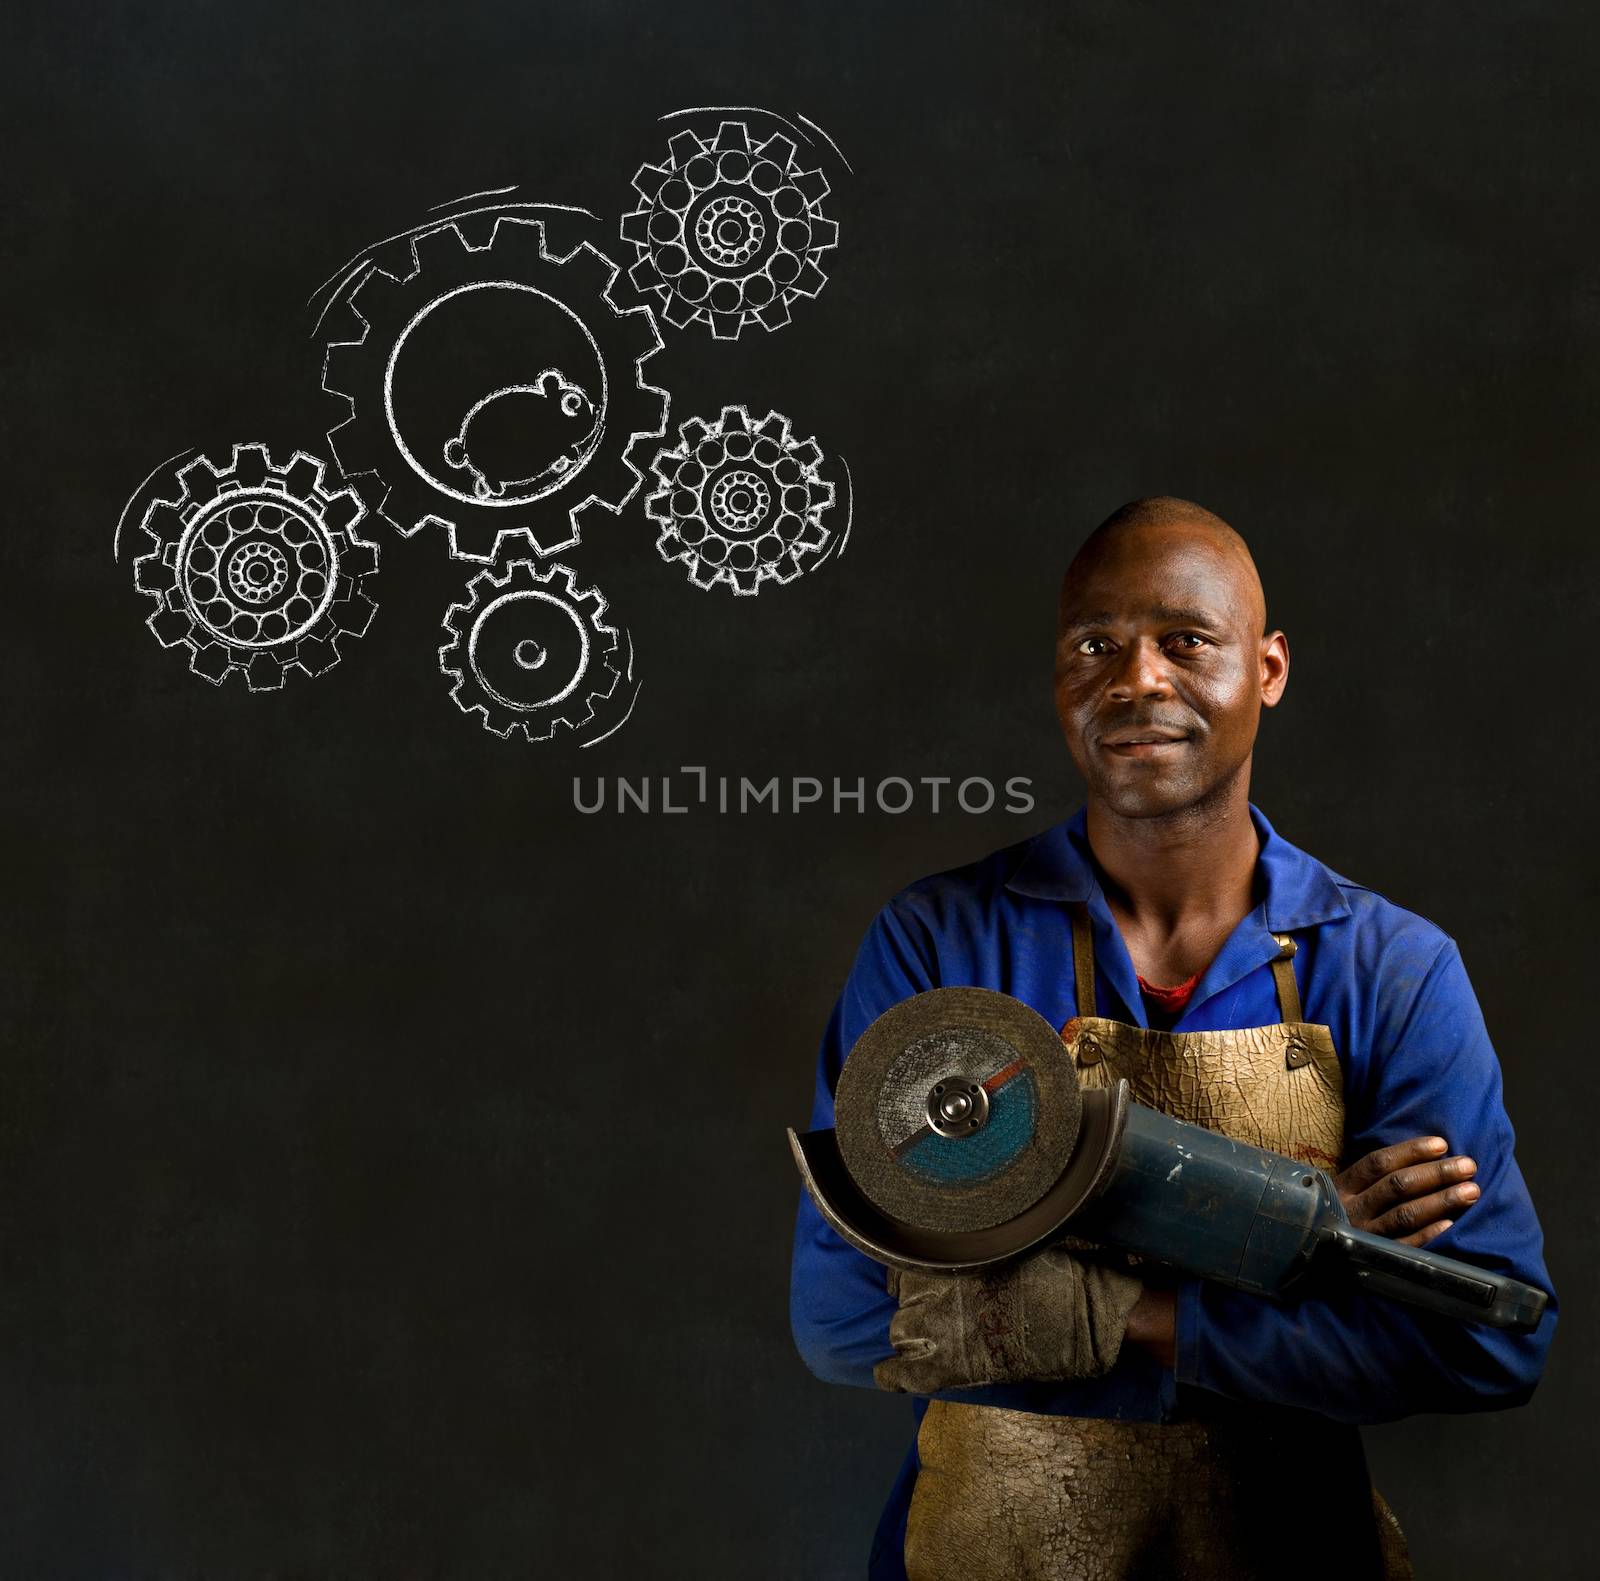 African American black man industrial worker with chalk hamster gears on a blackboard background